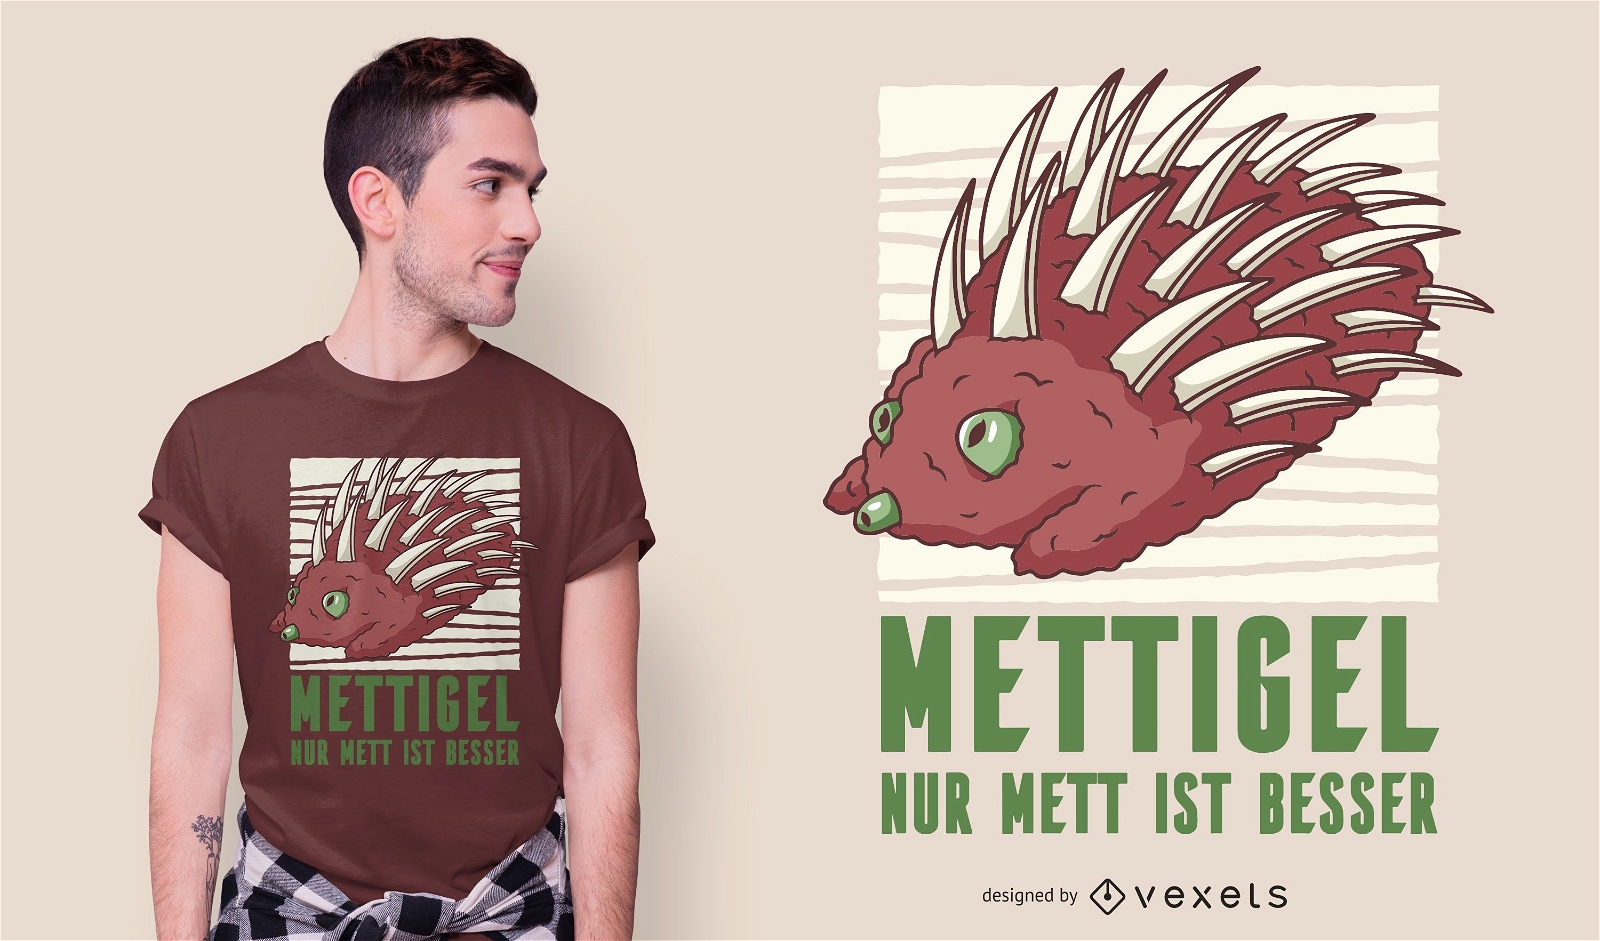 Mettigel t-shirt design